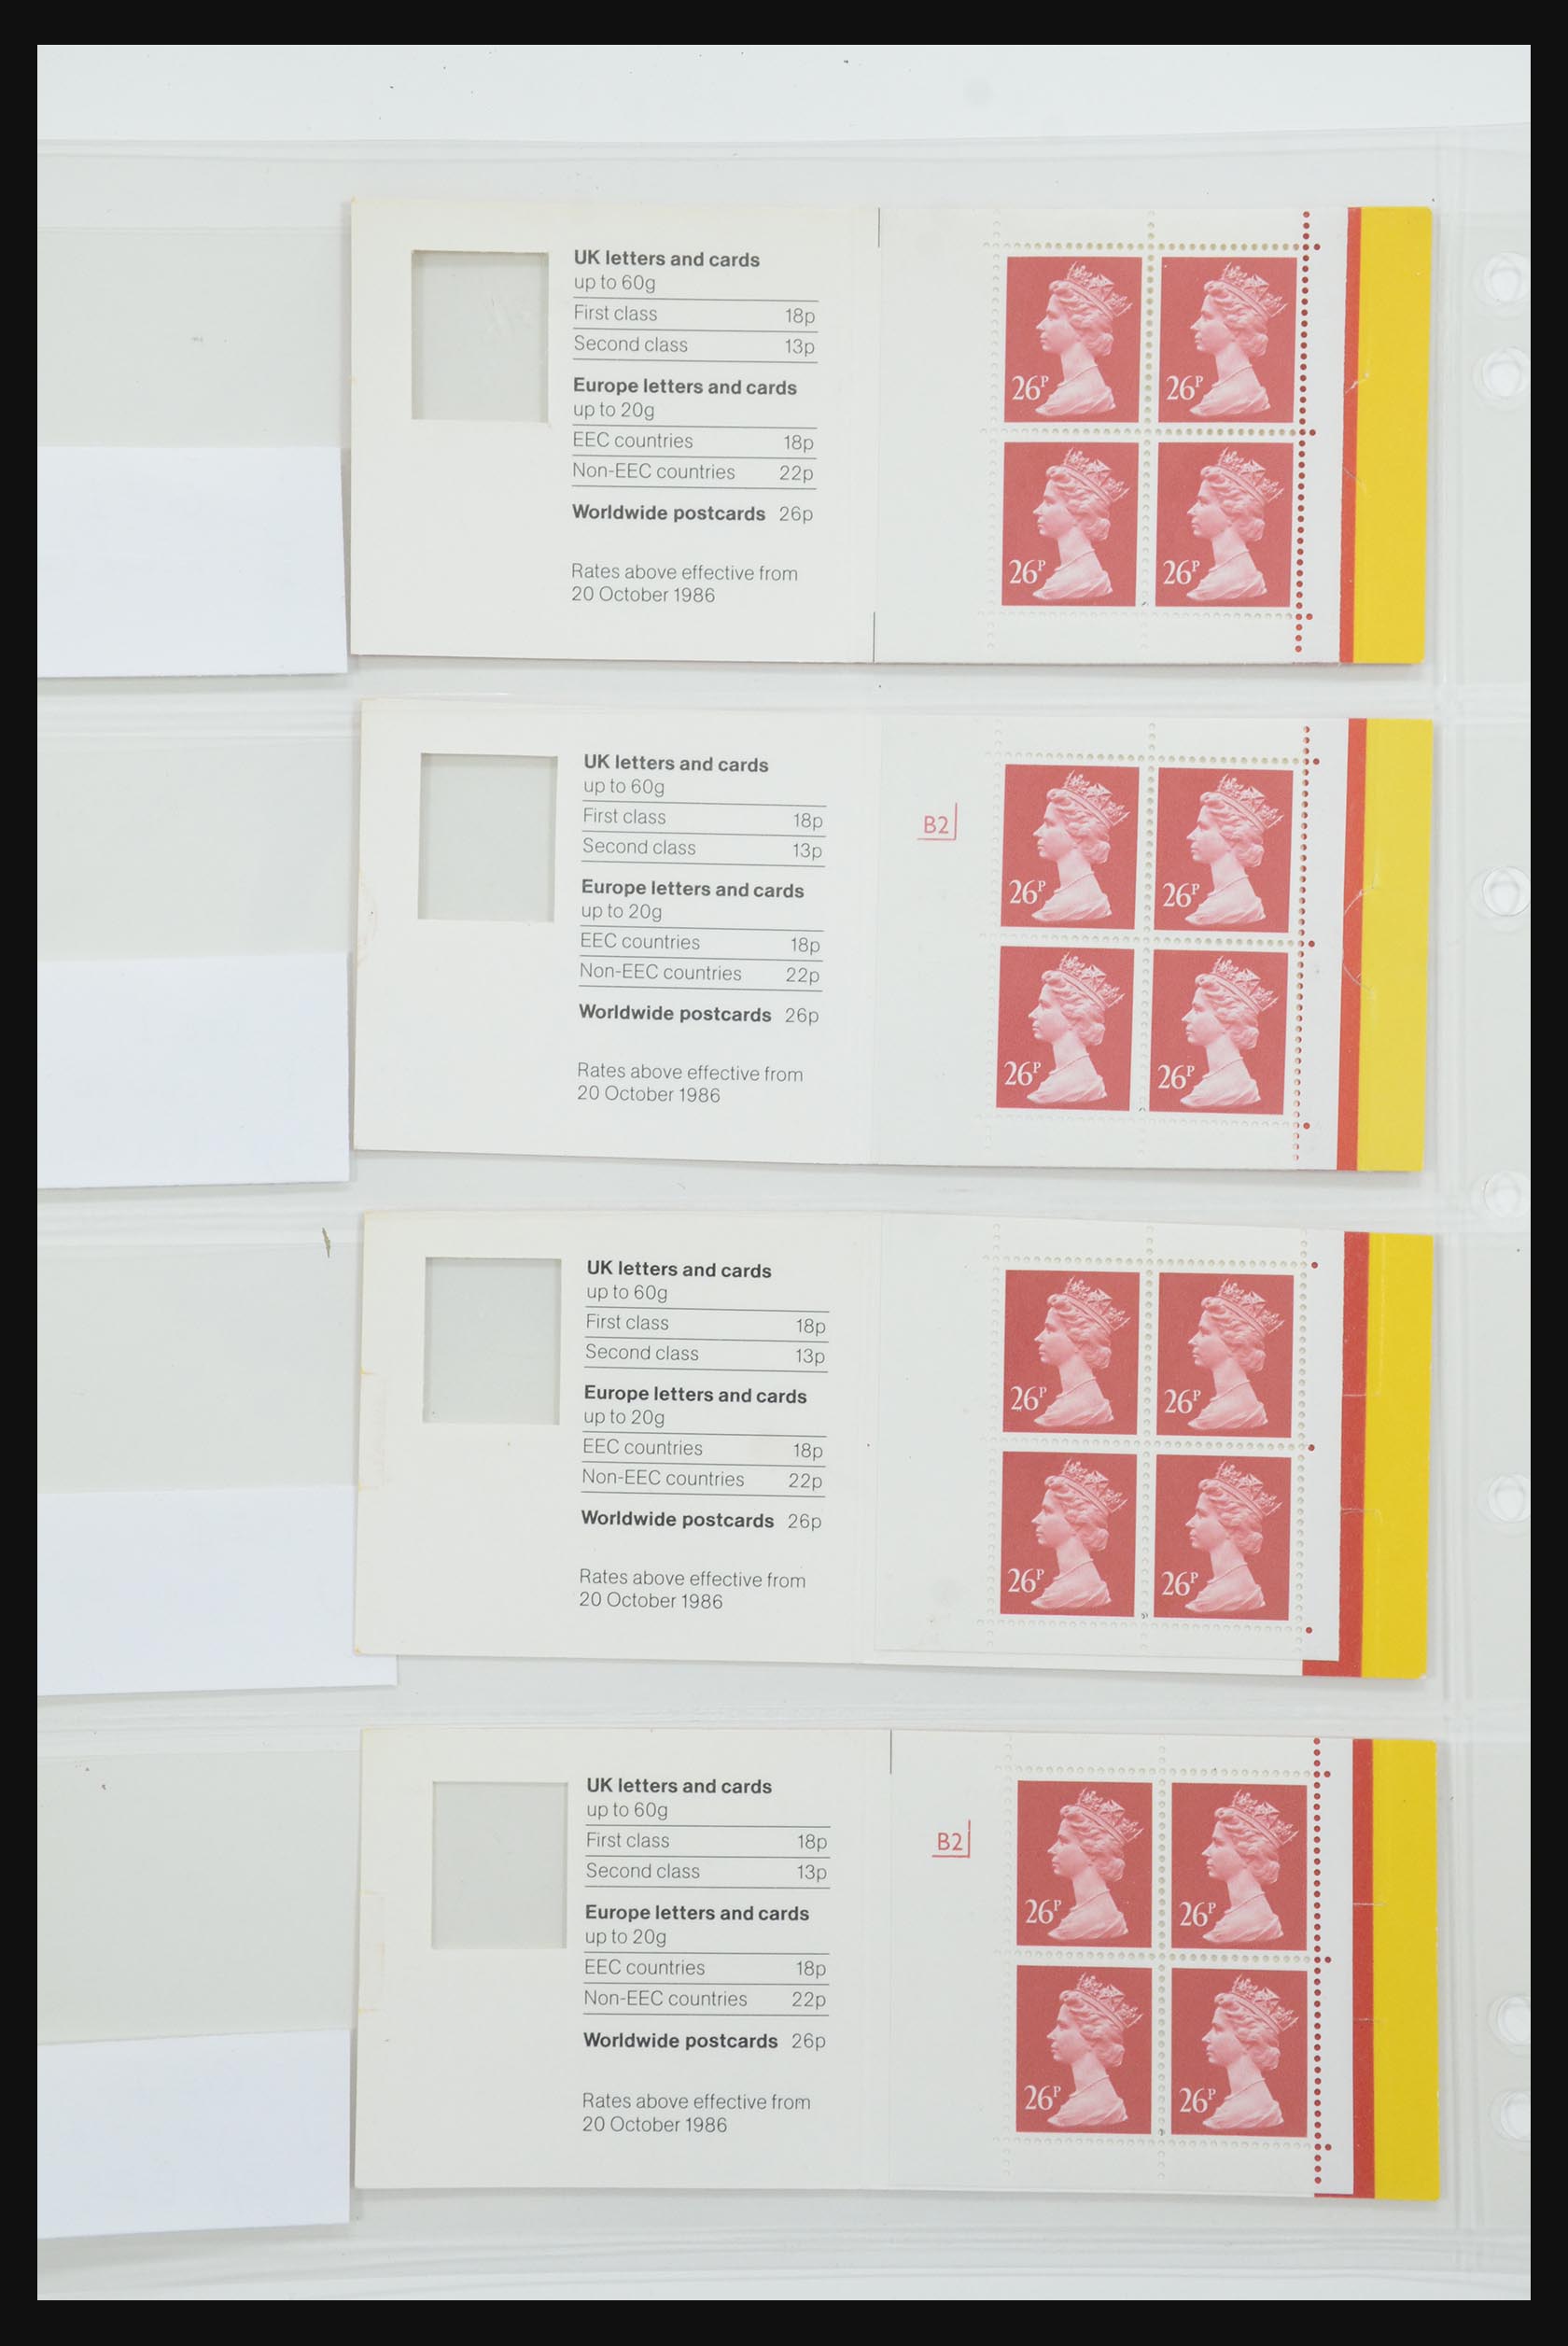 31959 024 - 31959 Great Britain stampbooklets 1987-2016!!